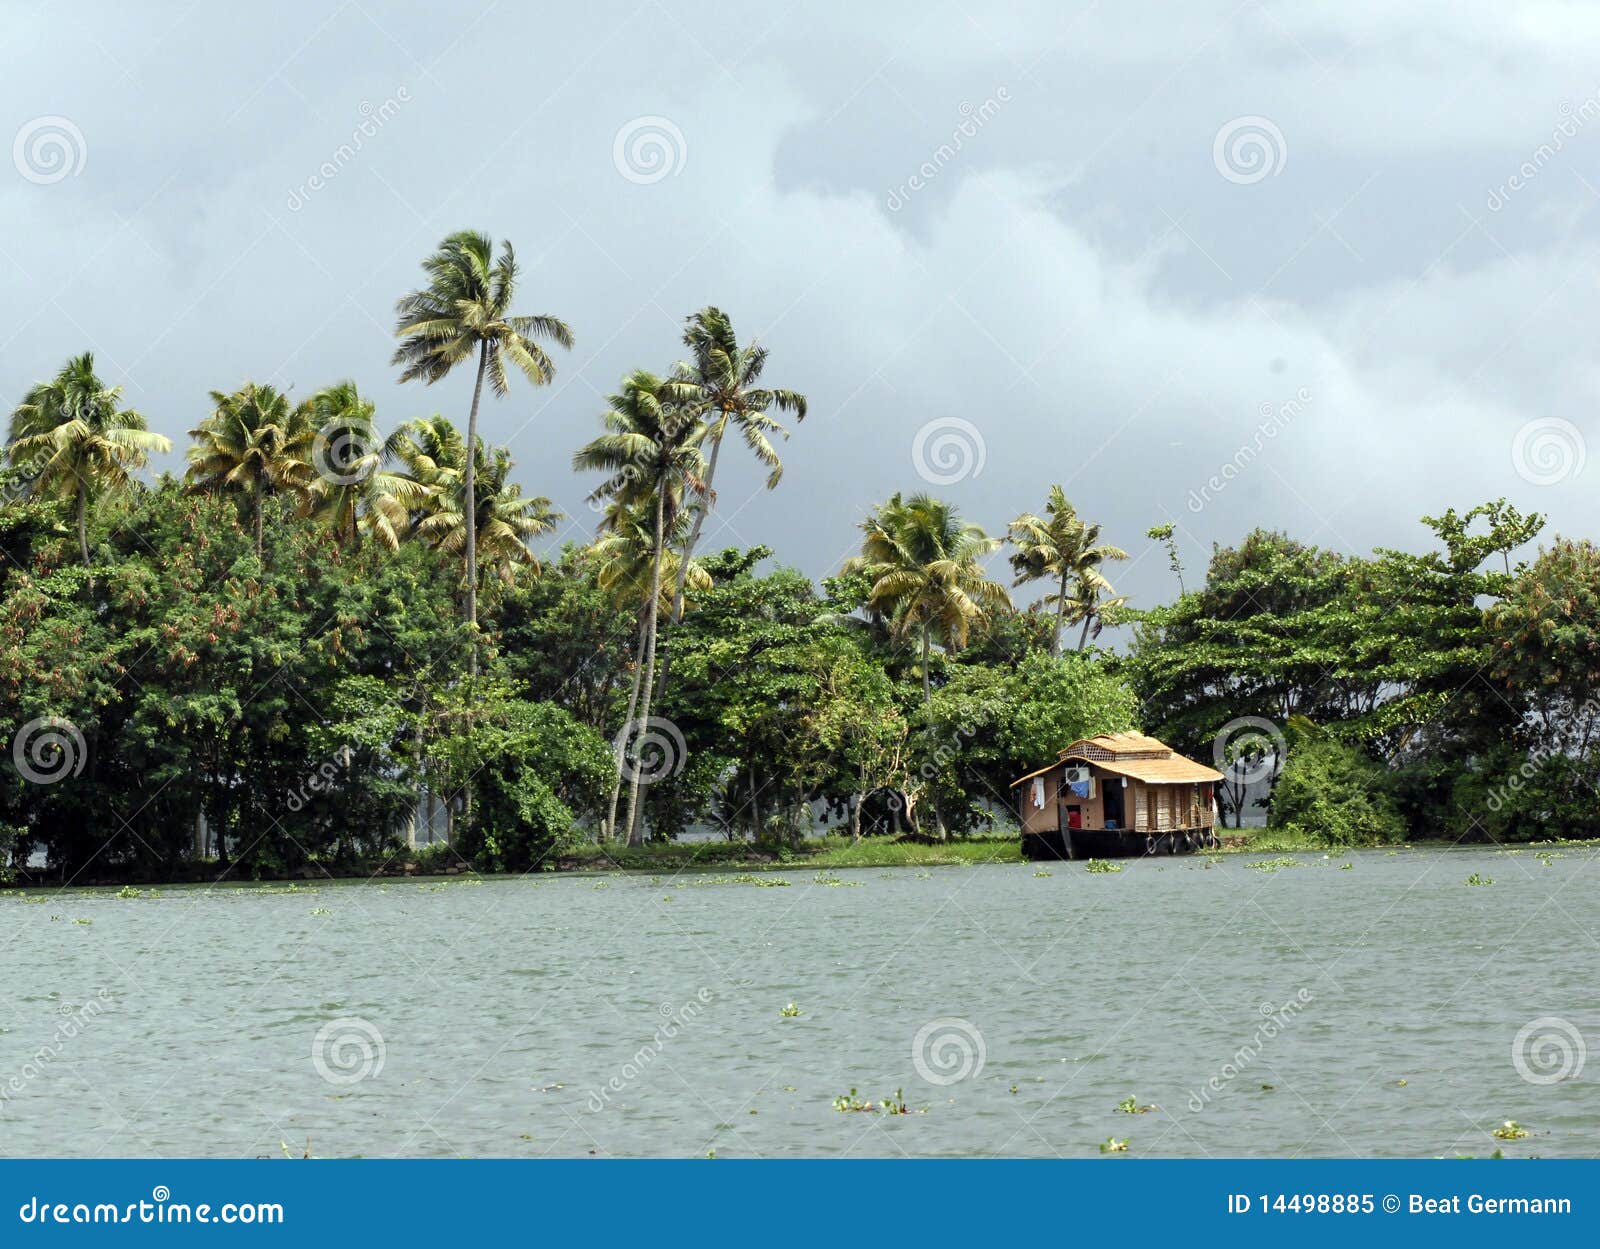 houseboat, backwaters, kerala, india